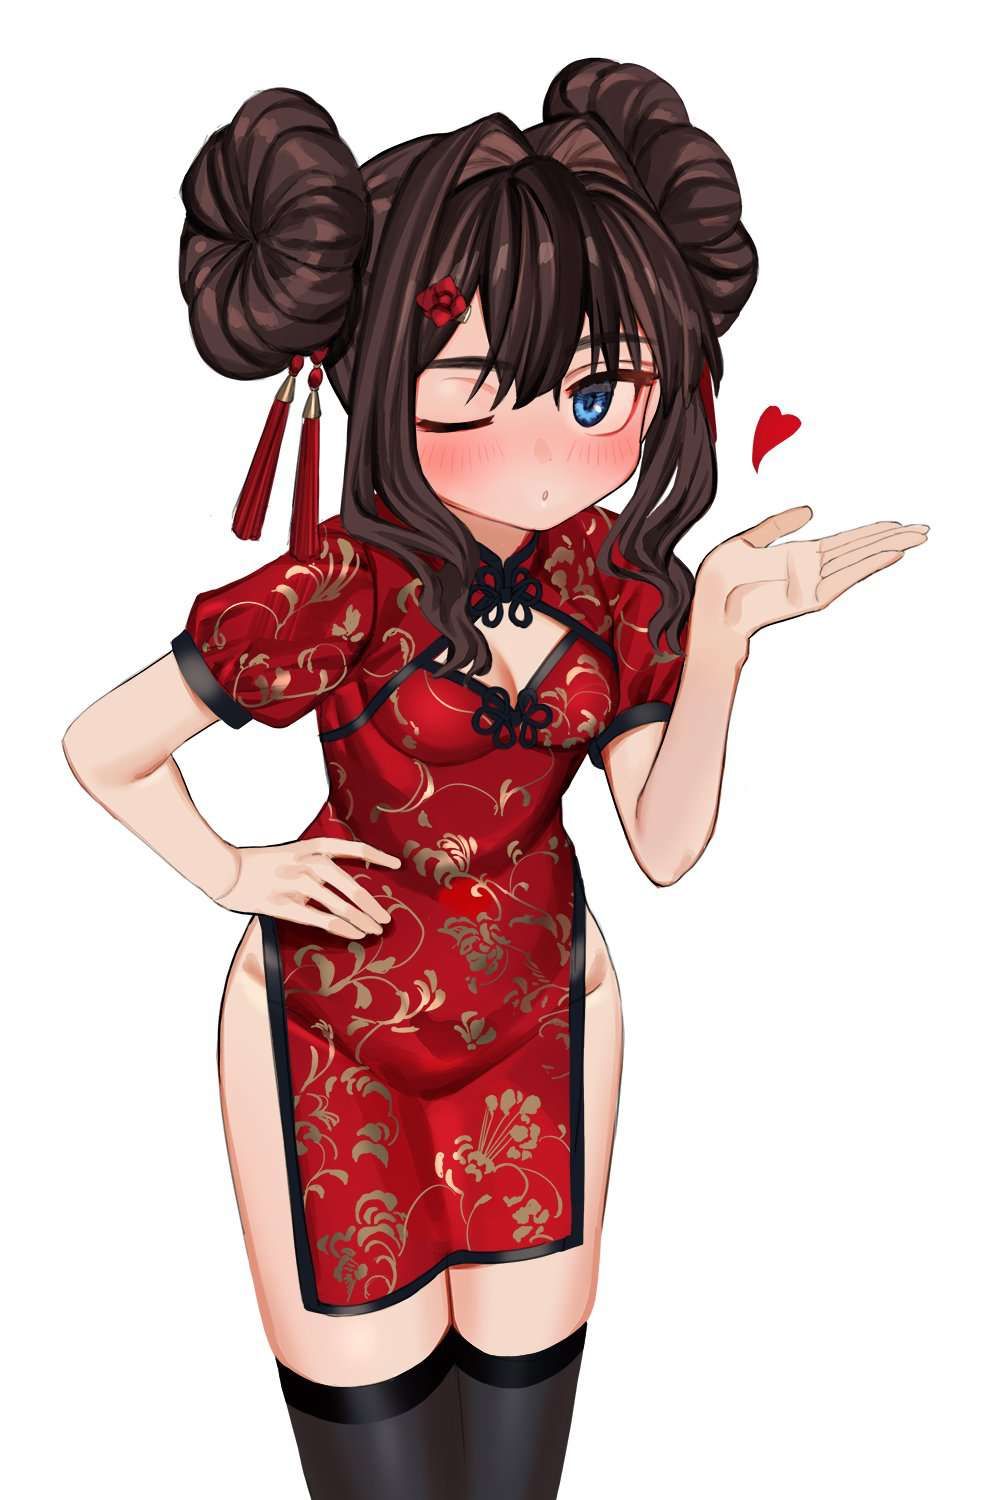 Please take an erotic image of China dress 18